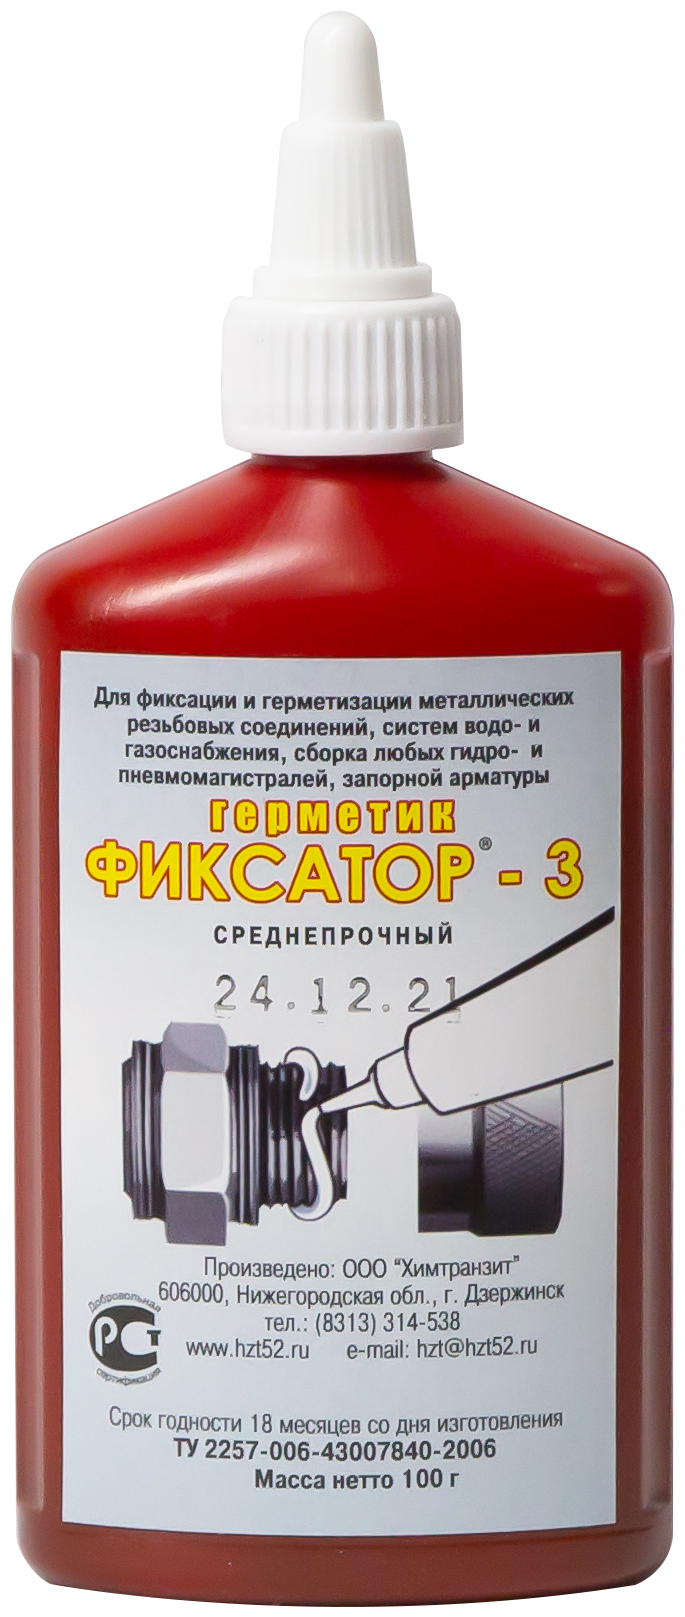 Фиксатор -3 анаэробный герметик 100гр